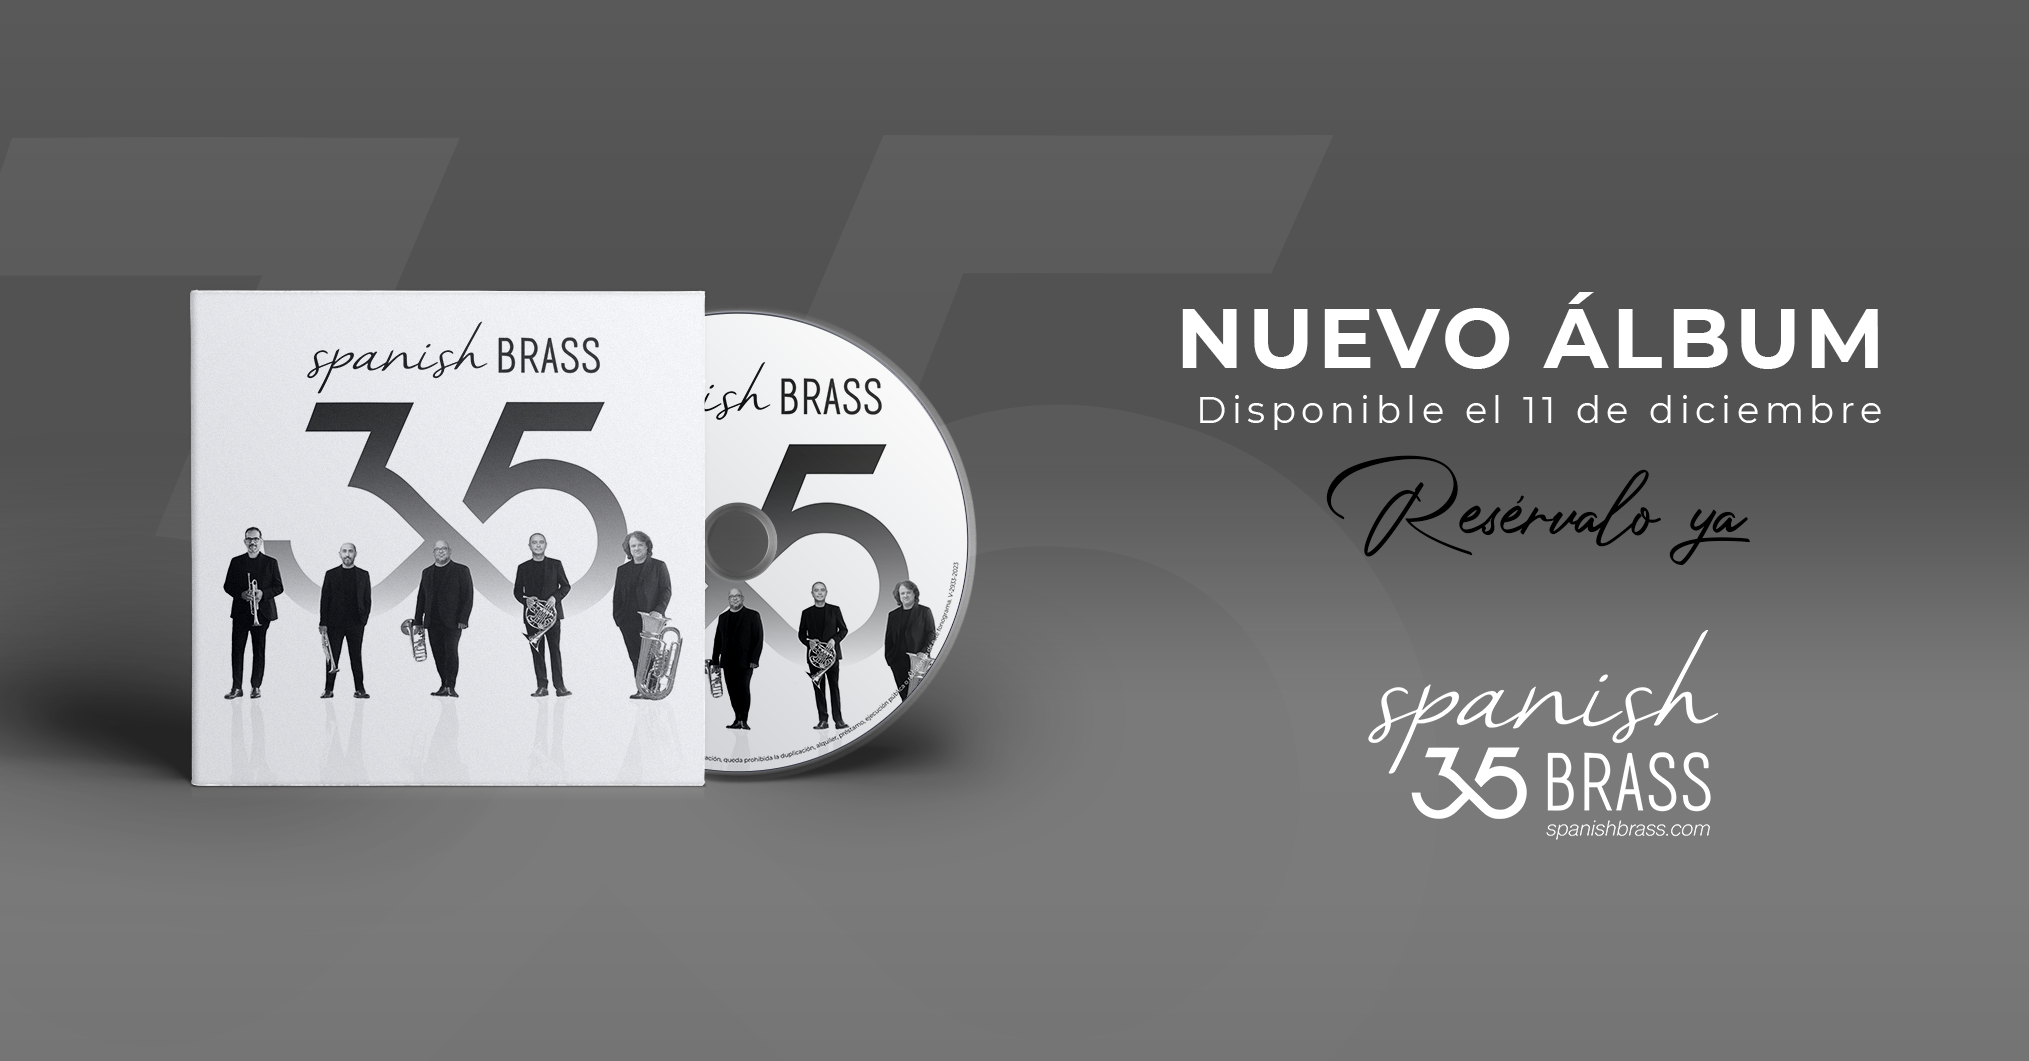 spanish brass 35